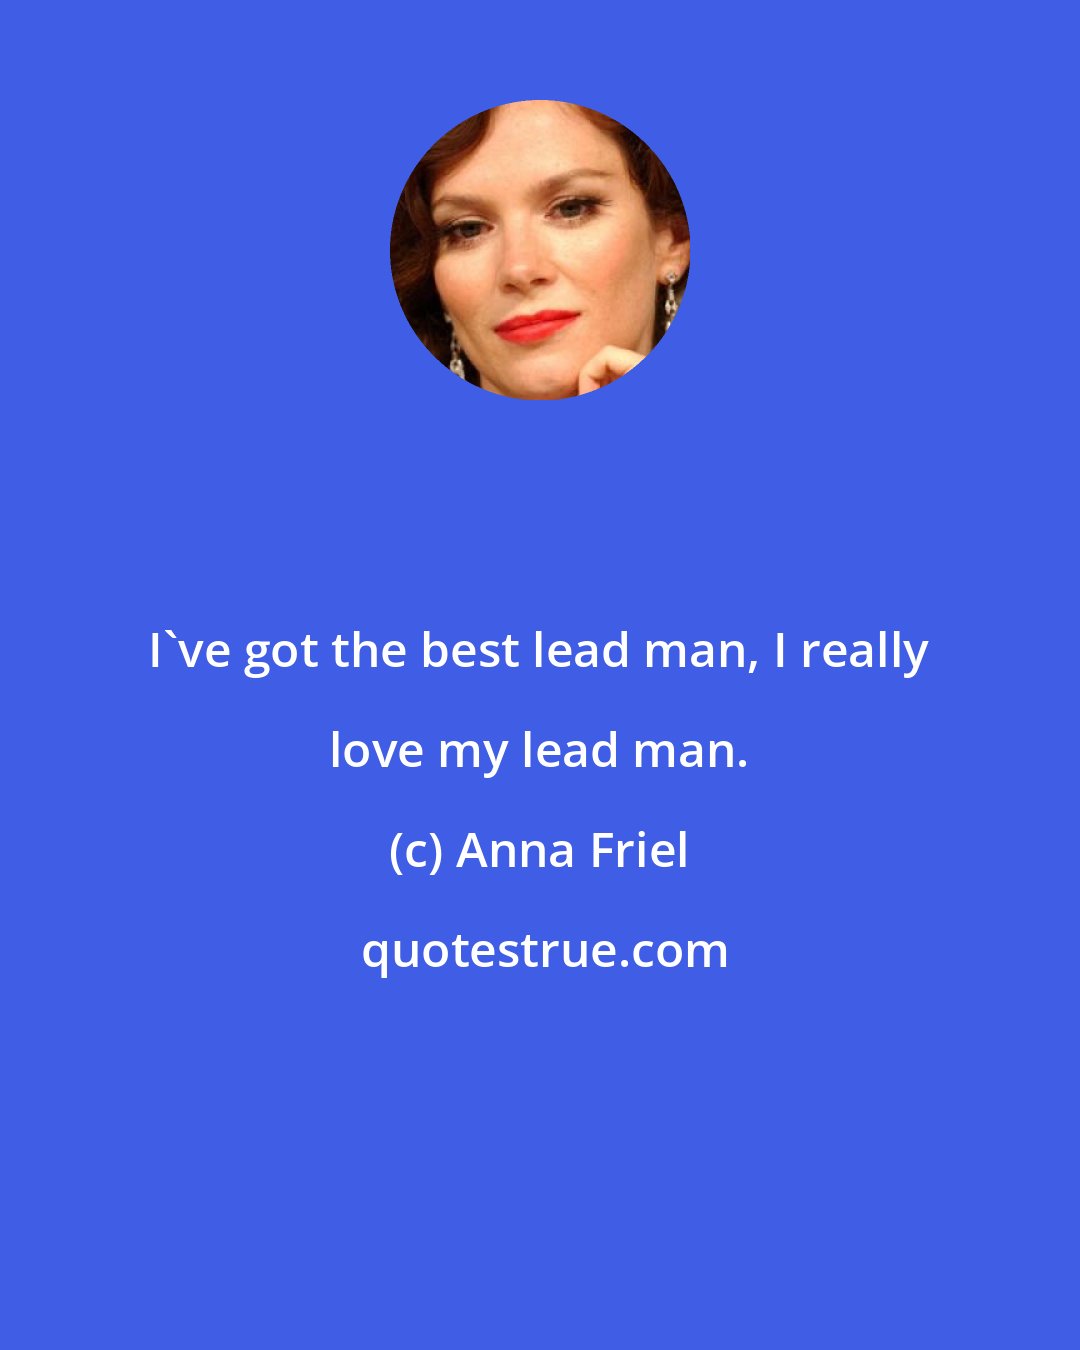 Anna Friel: I've got the best lead man, I really love my lead man.